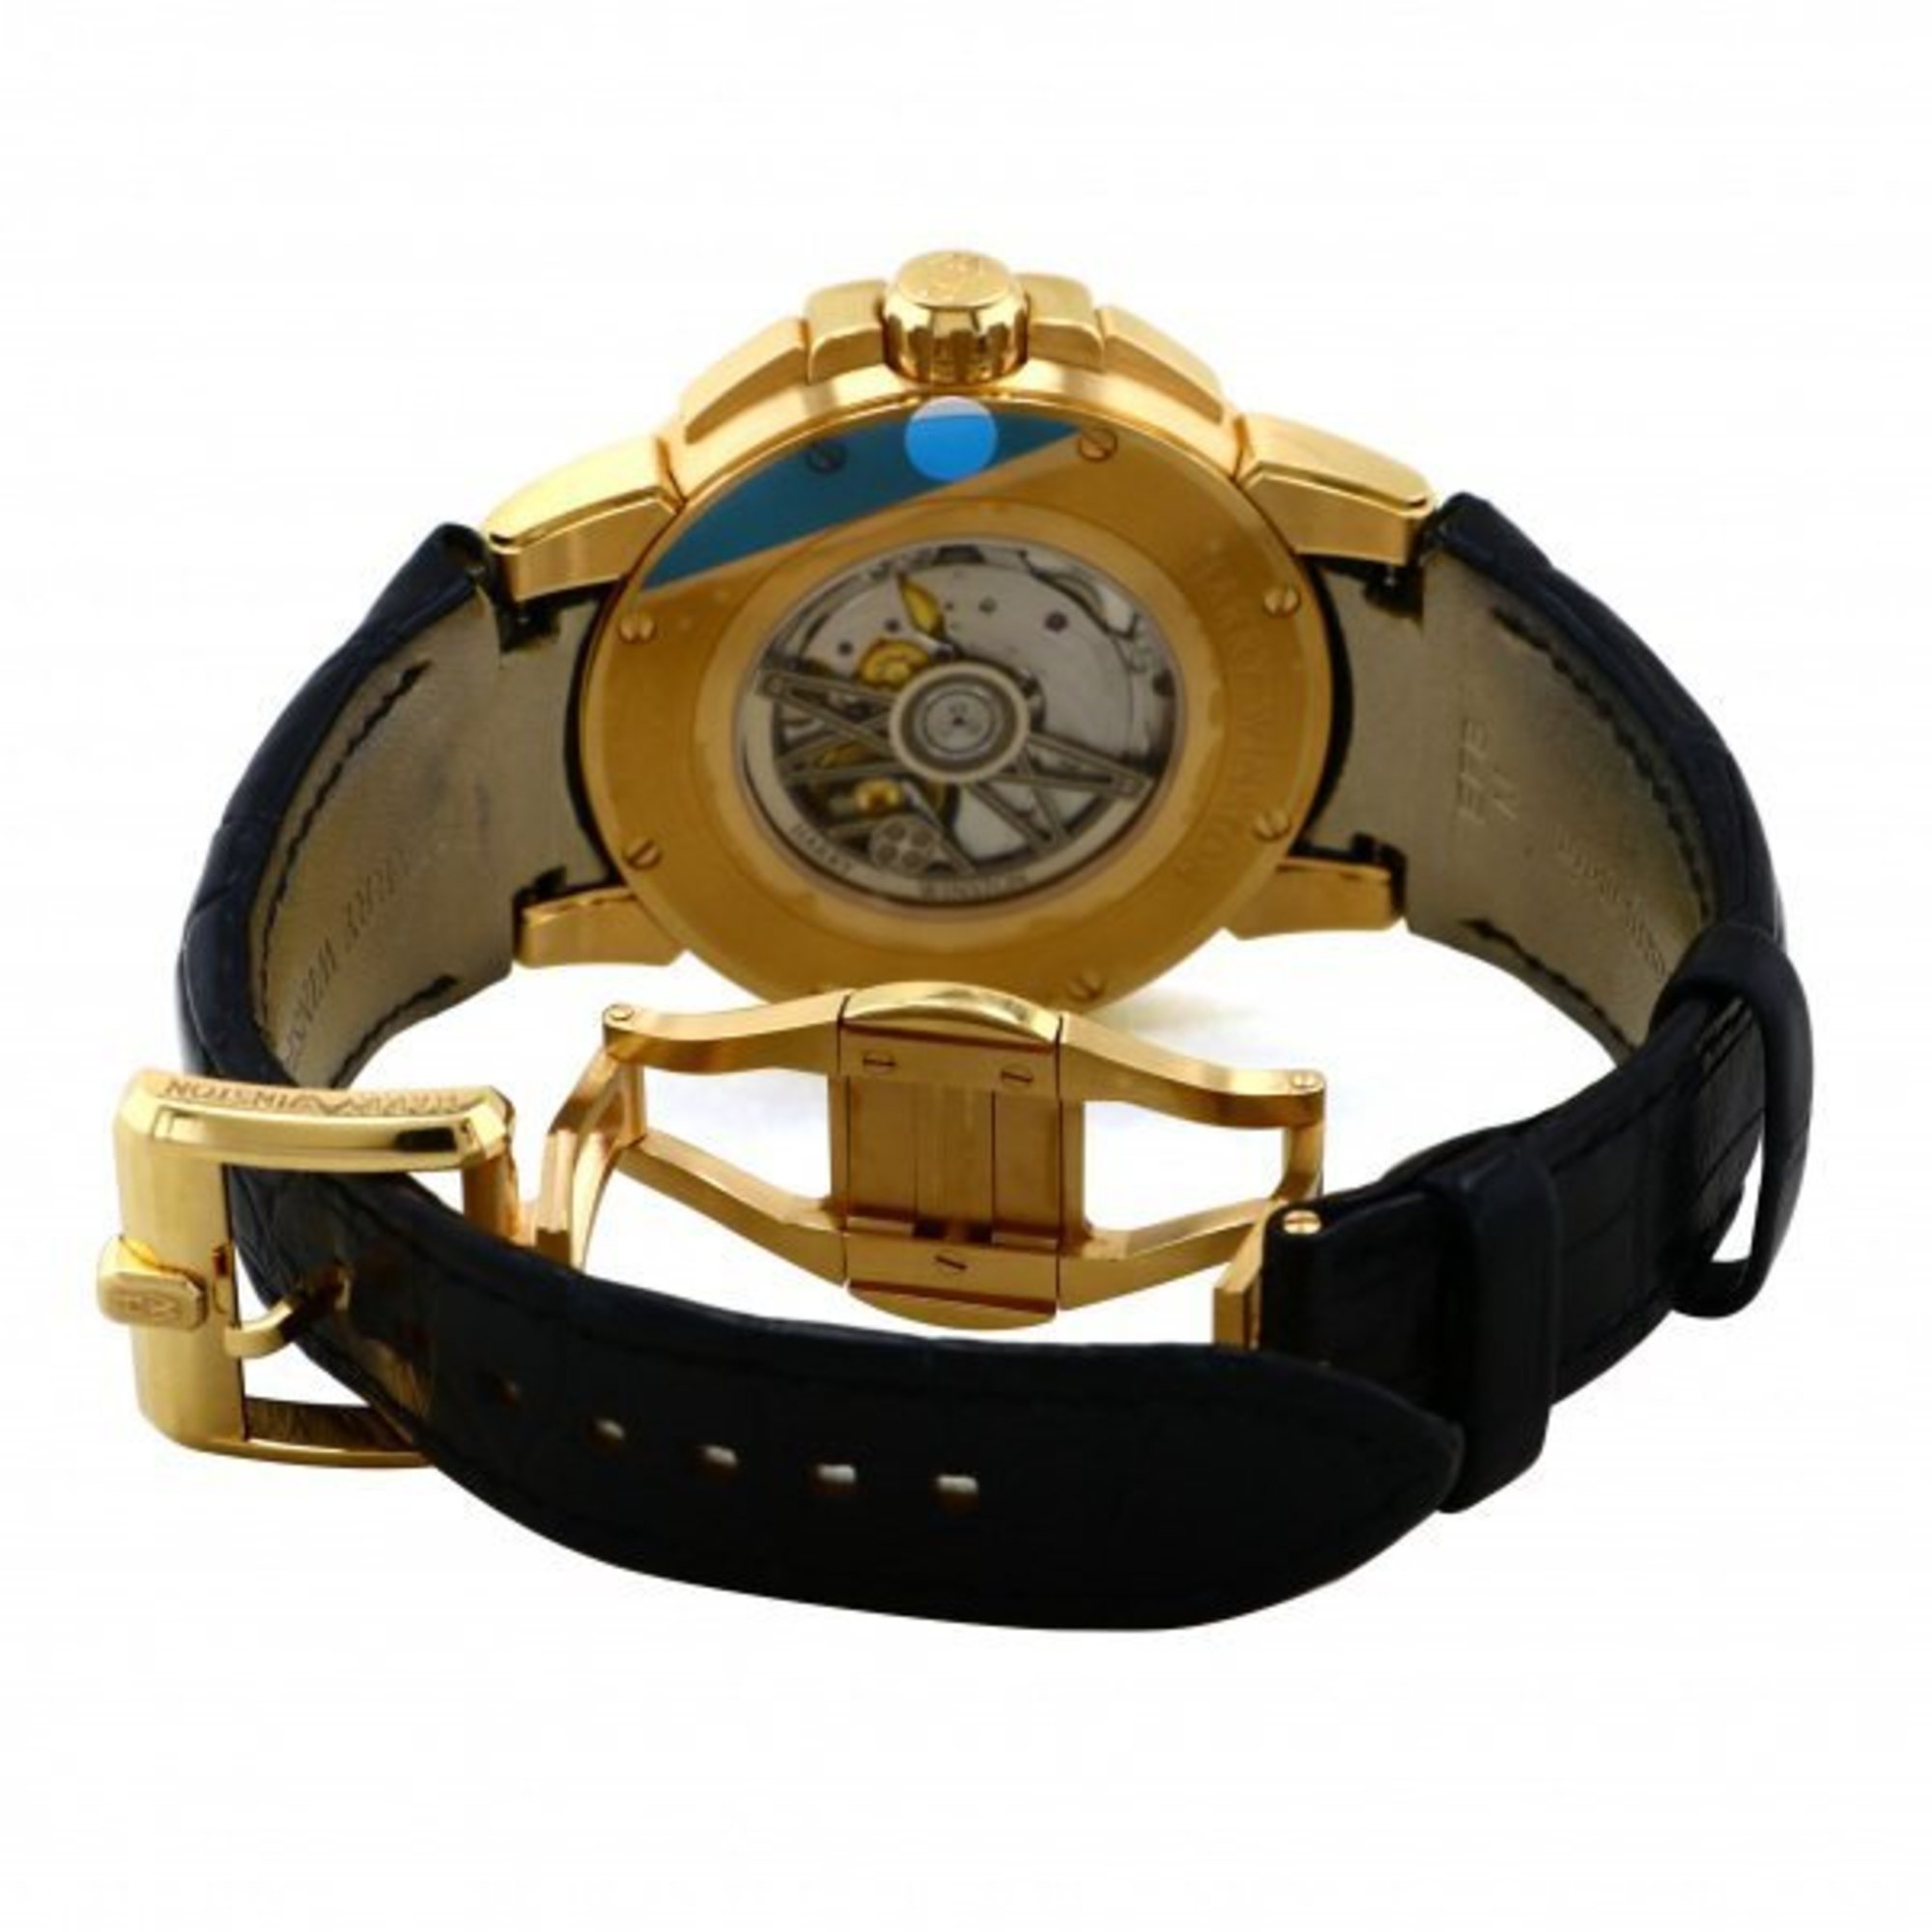 Harry Winston HARRY WINSTON ocean dual time automatic OCEATZ44RR011 black dial watch men's